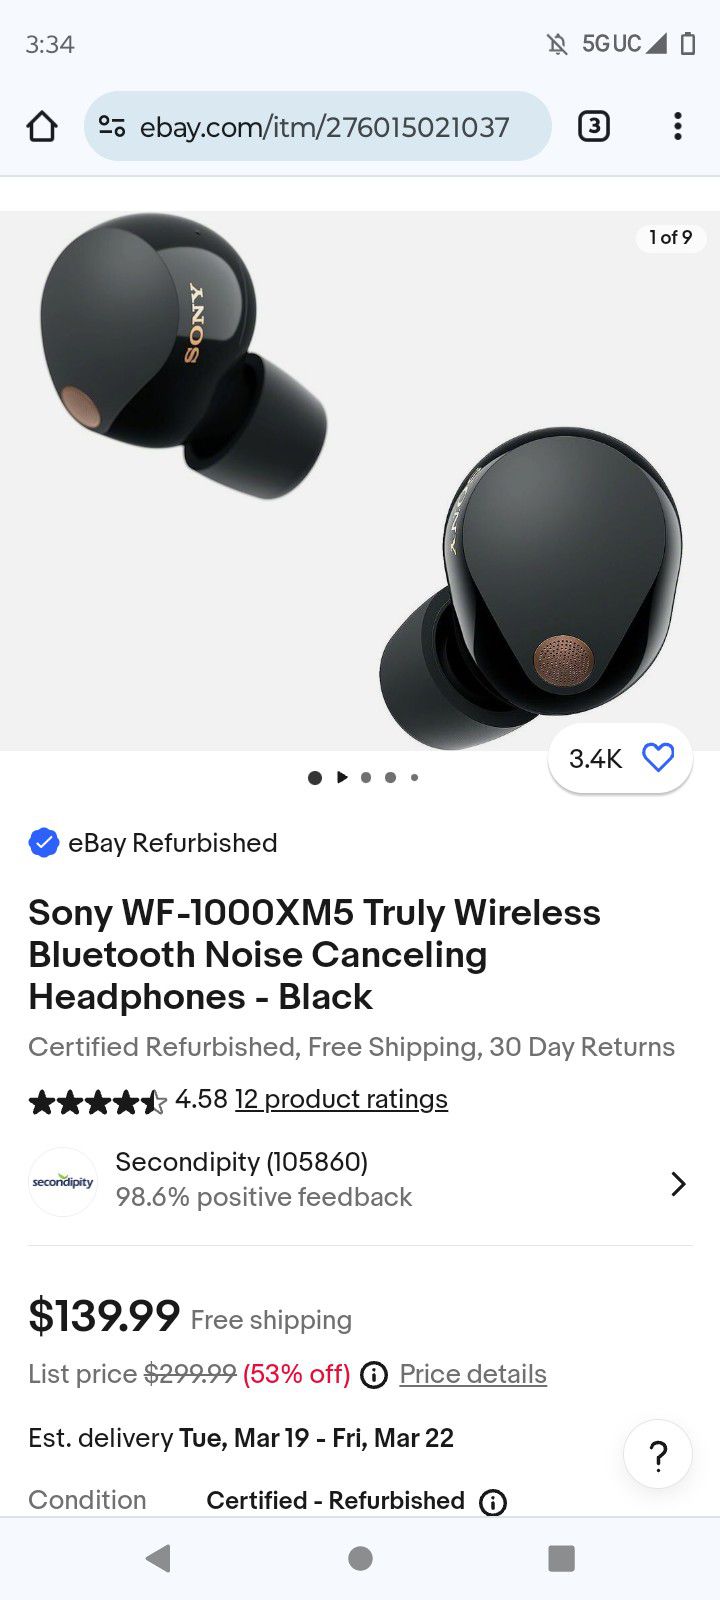 Sony Earbuds 